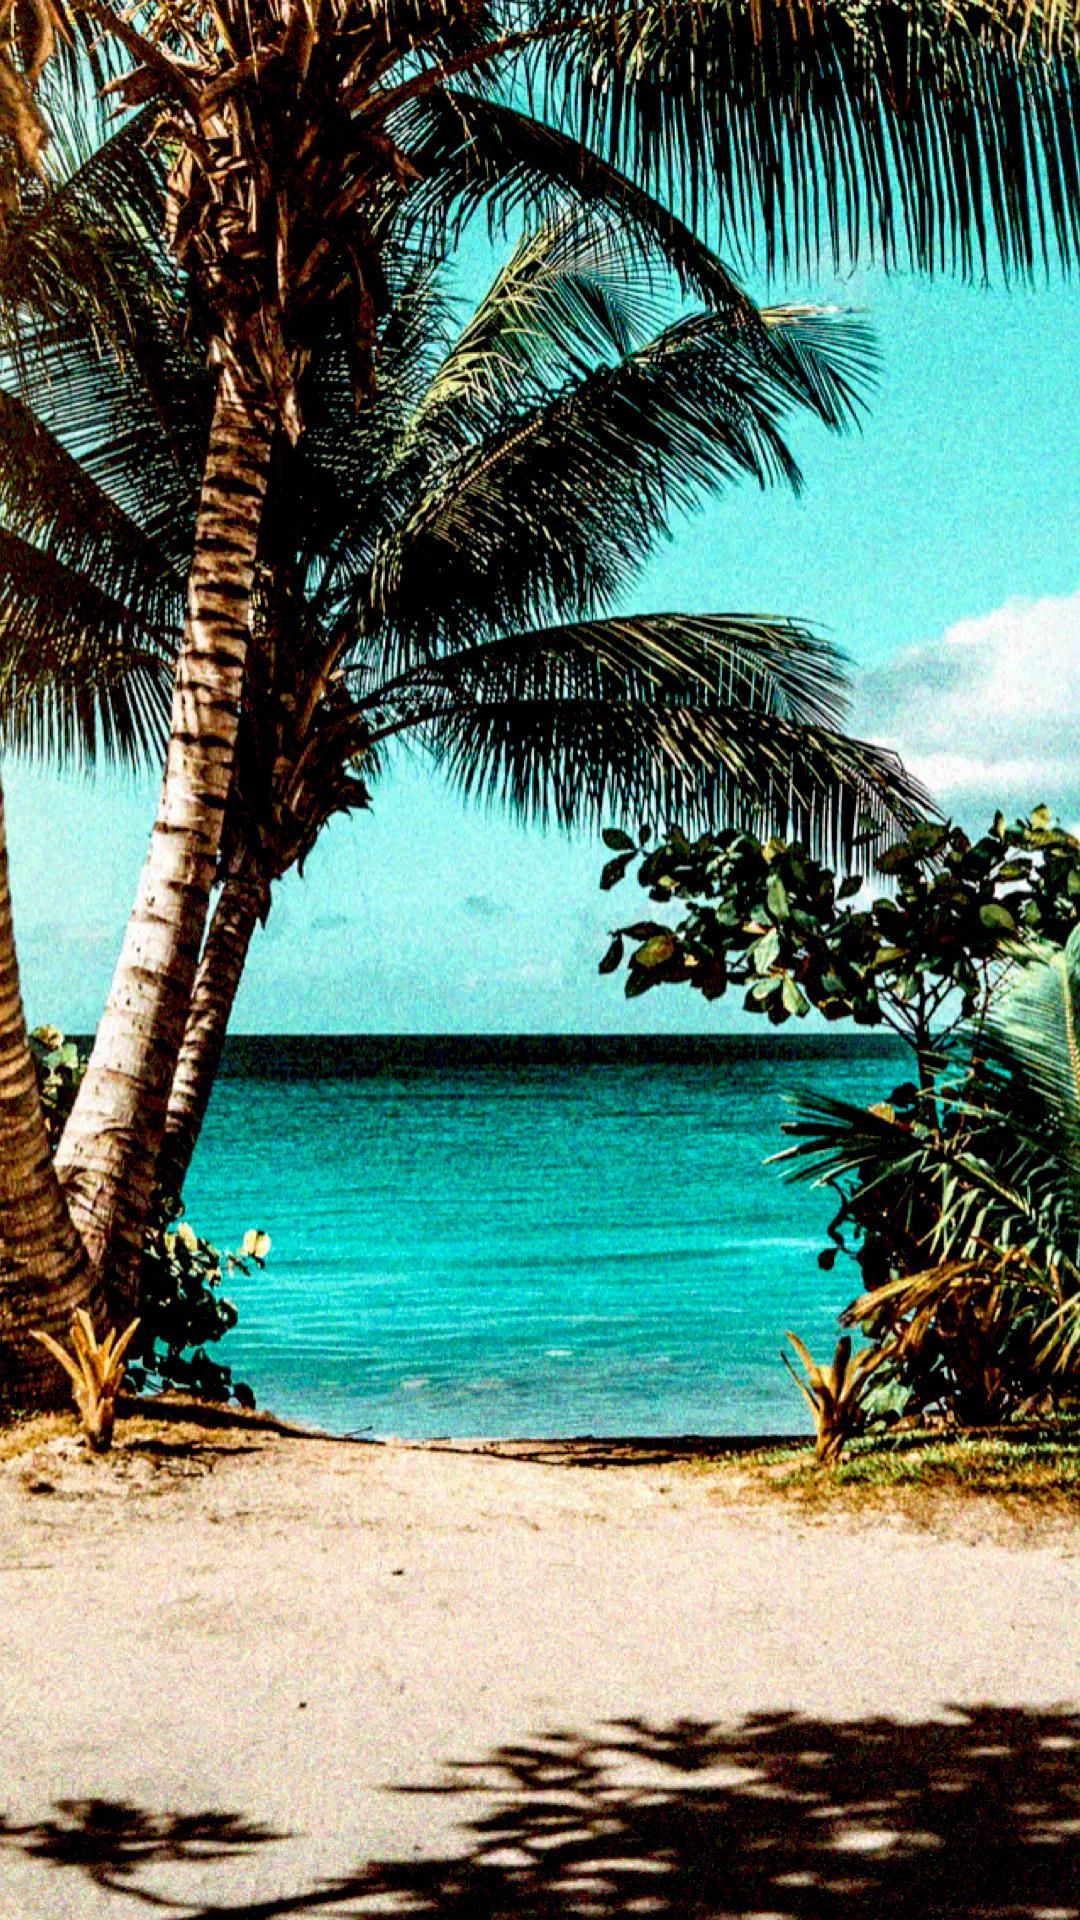 A palm tree leaning over the beach - Beach, tropical